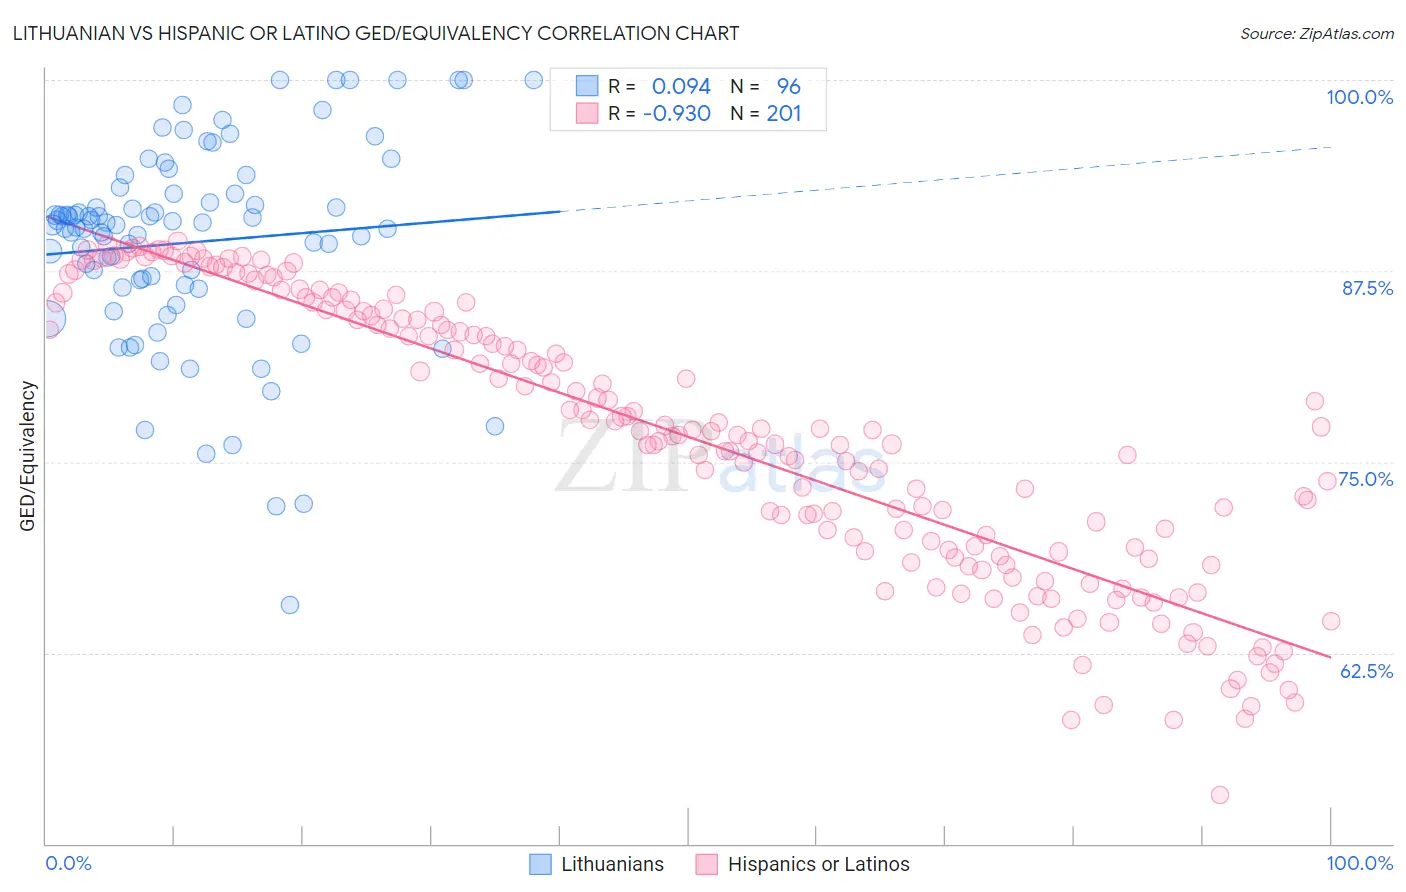 Lithuanian vs Hispanic or Latino GED/Equivalency